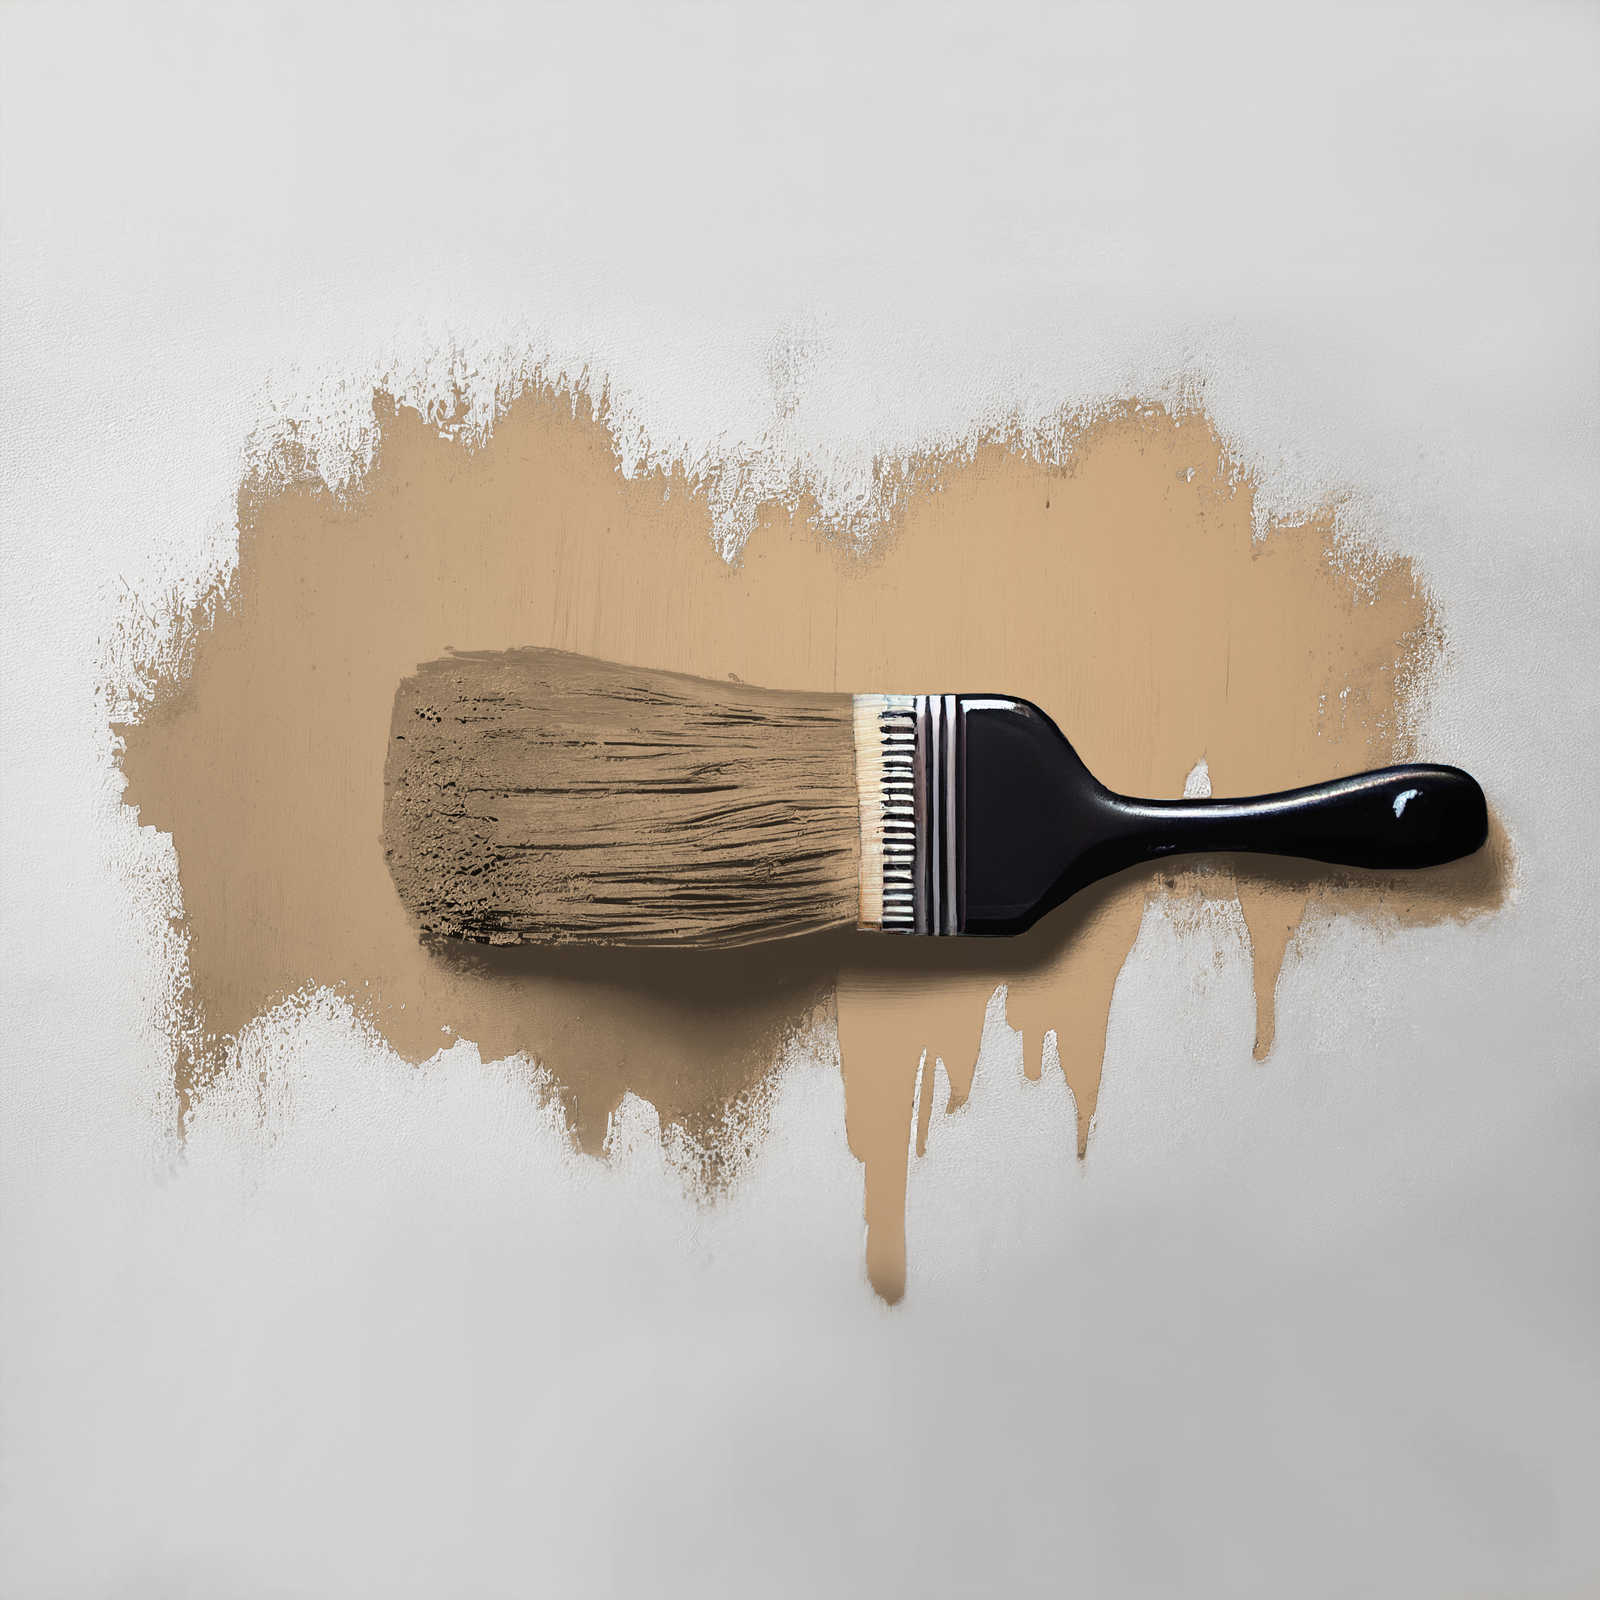             Wall Paint TCK6004 »Active Almond« in cosy beige brown – 5.0 litre
        